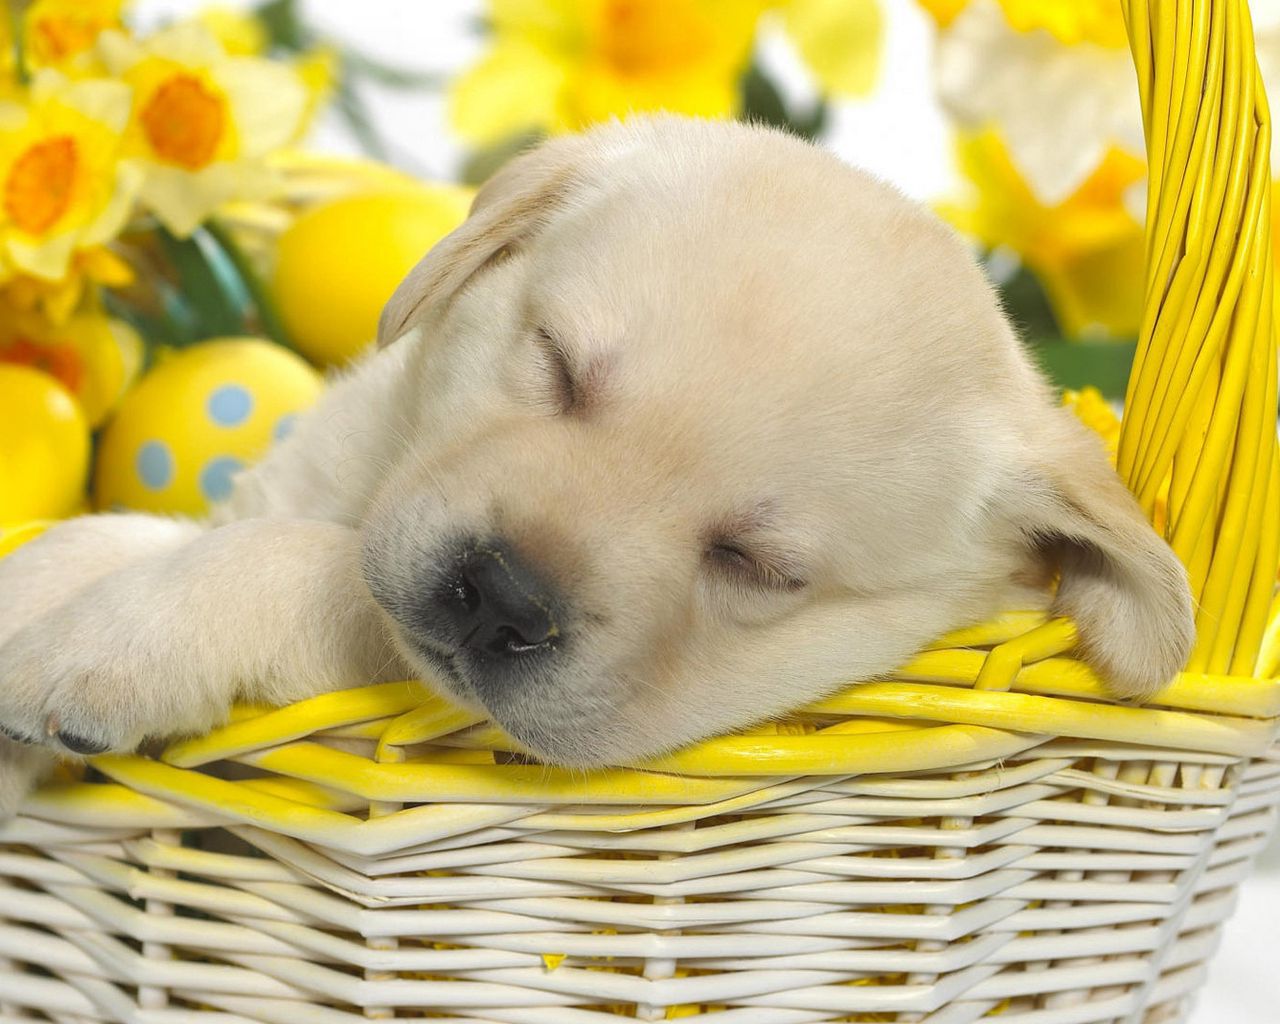 Download wallpaper 1280x1024 puppy, labrador, sleeping, shopping, eggs,  flowers, easter standard 5:4 hd background